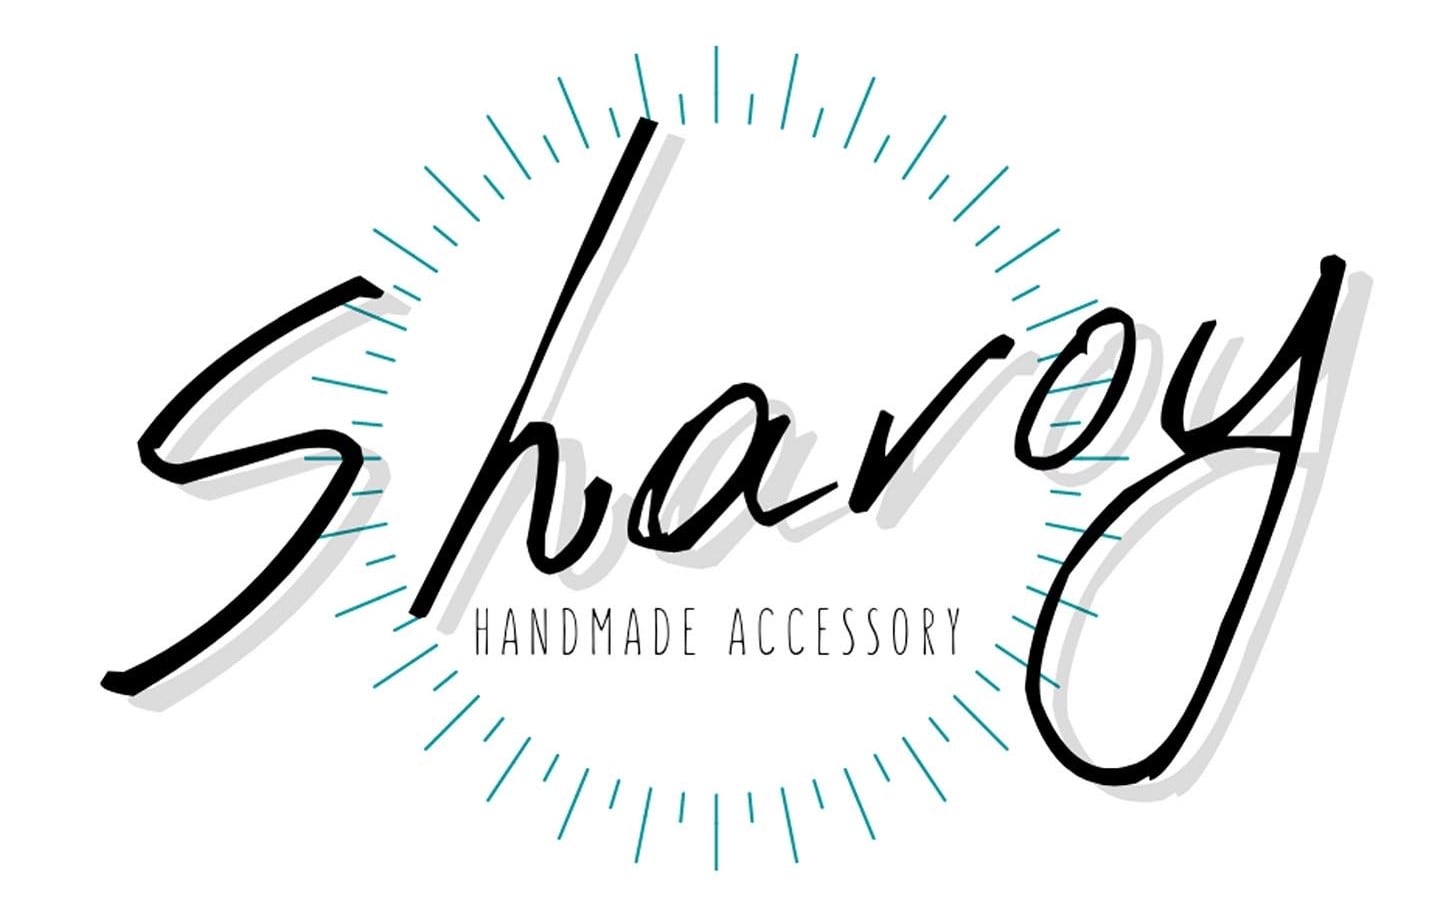 Sharoy-handmade accesary-